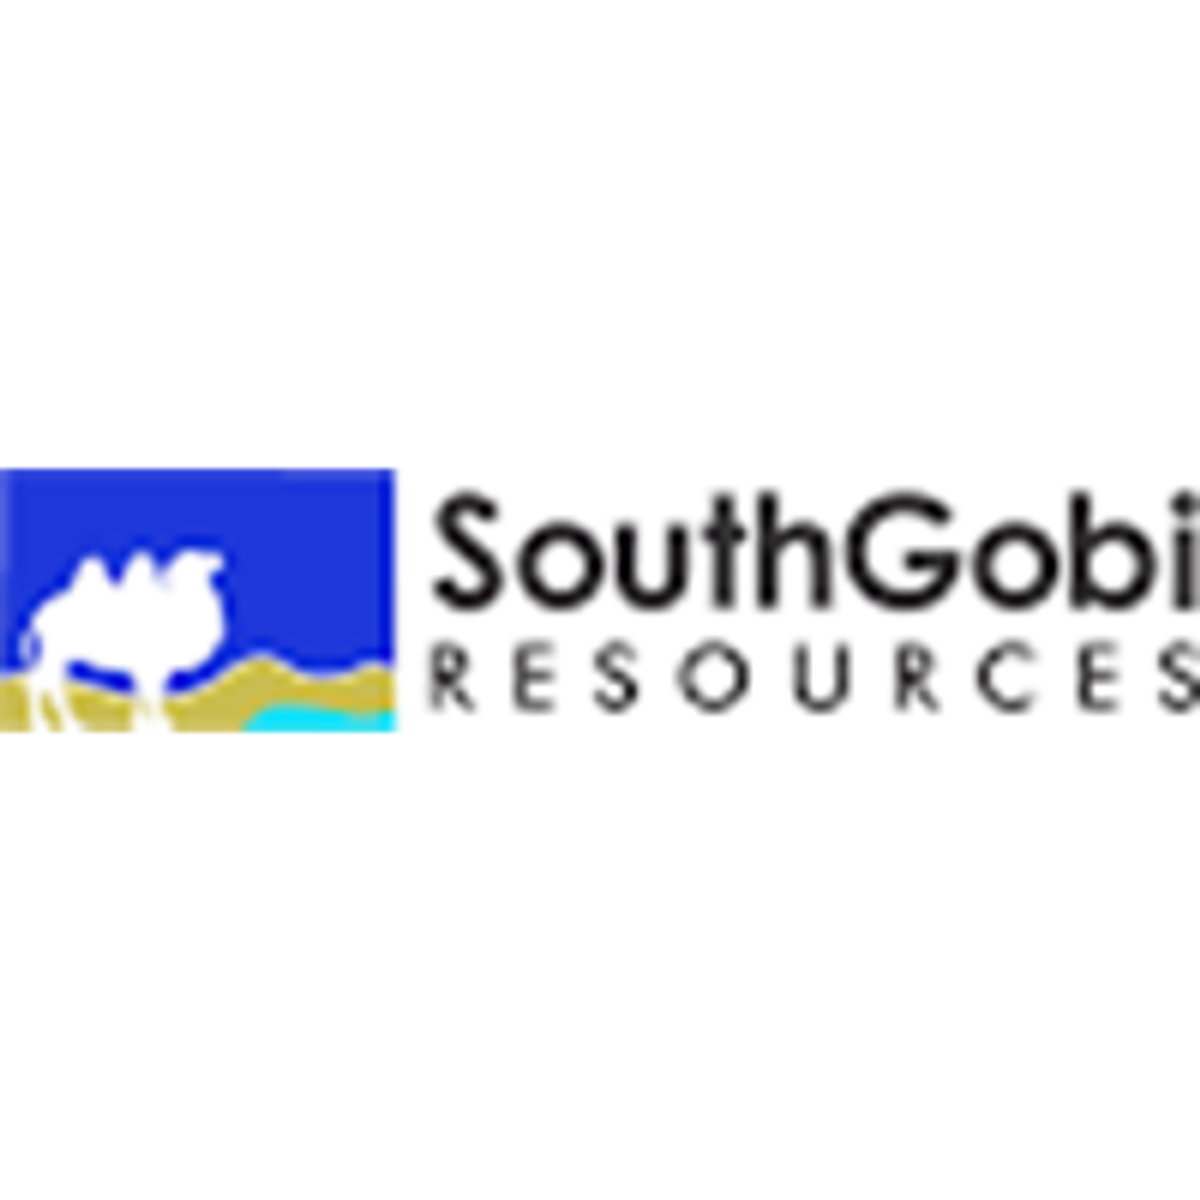 Southgobi Announces Update on Voluntary Delisting